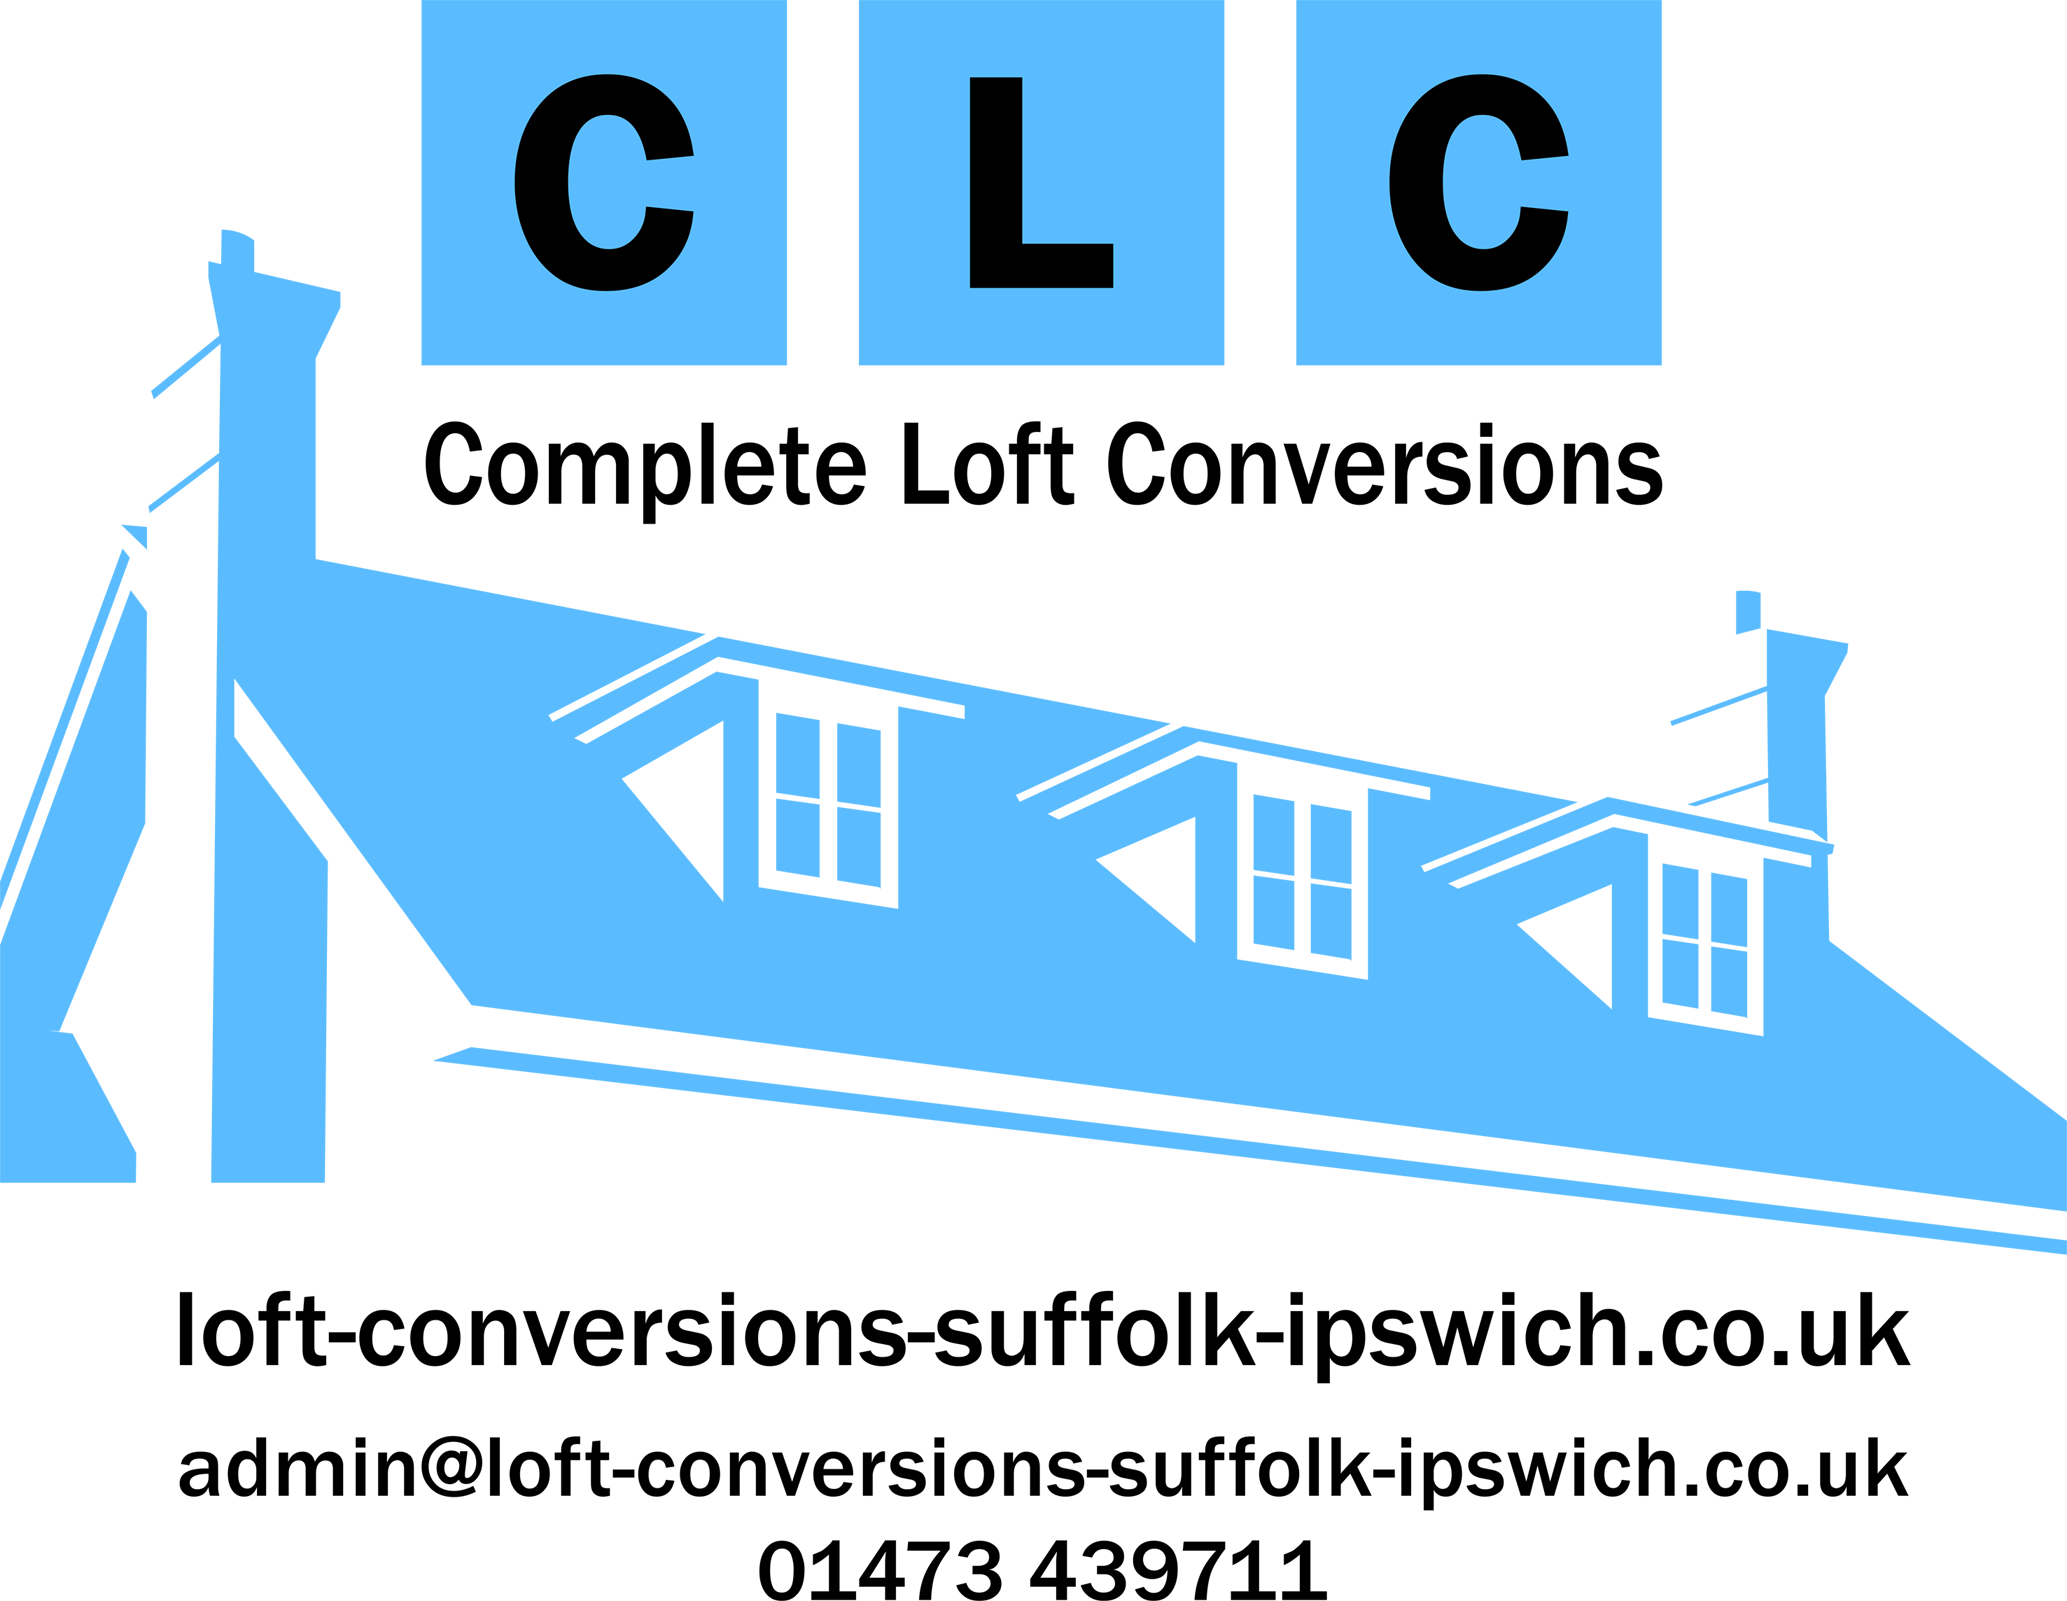 (c) Loft-conversions-suffolk-ipswich.co.uk